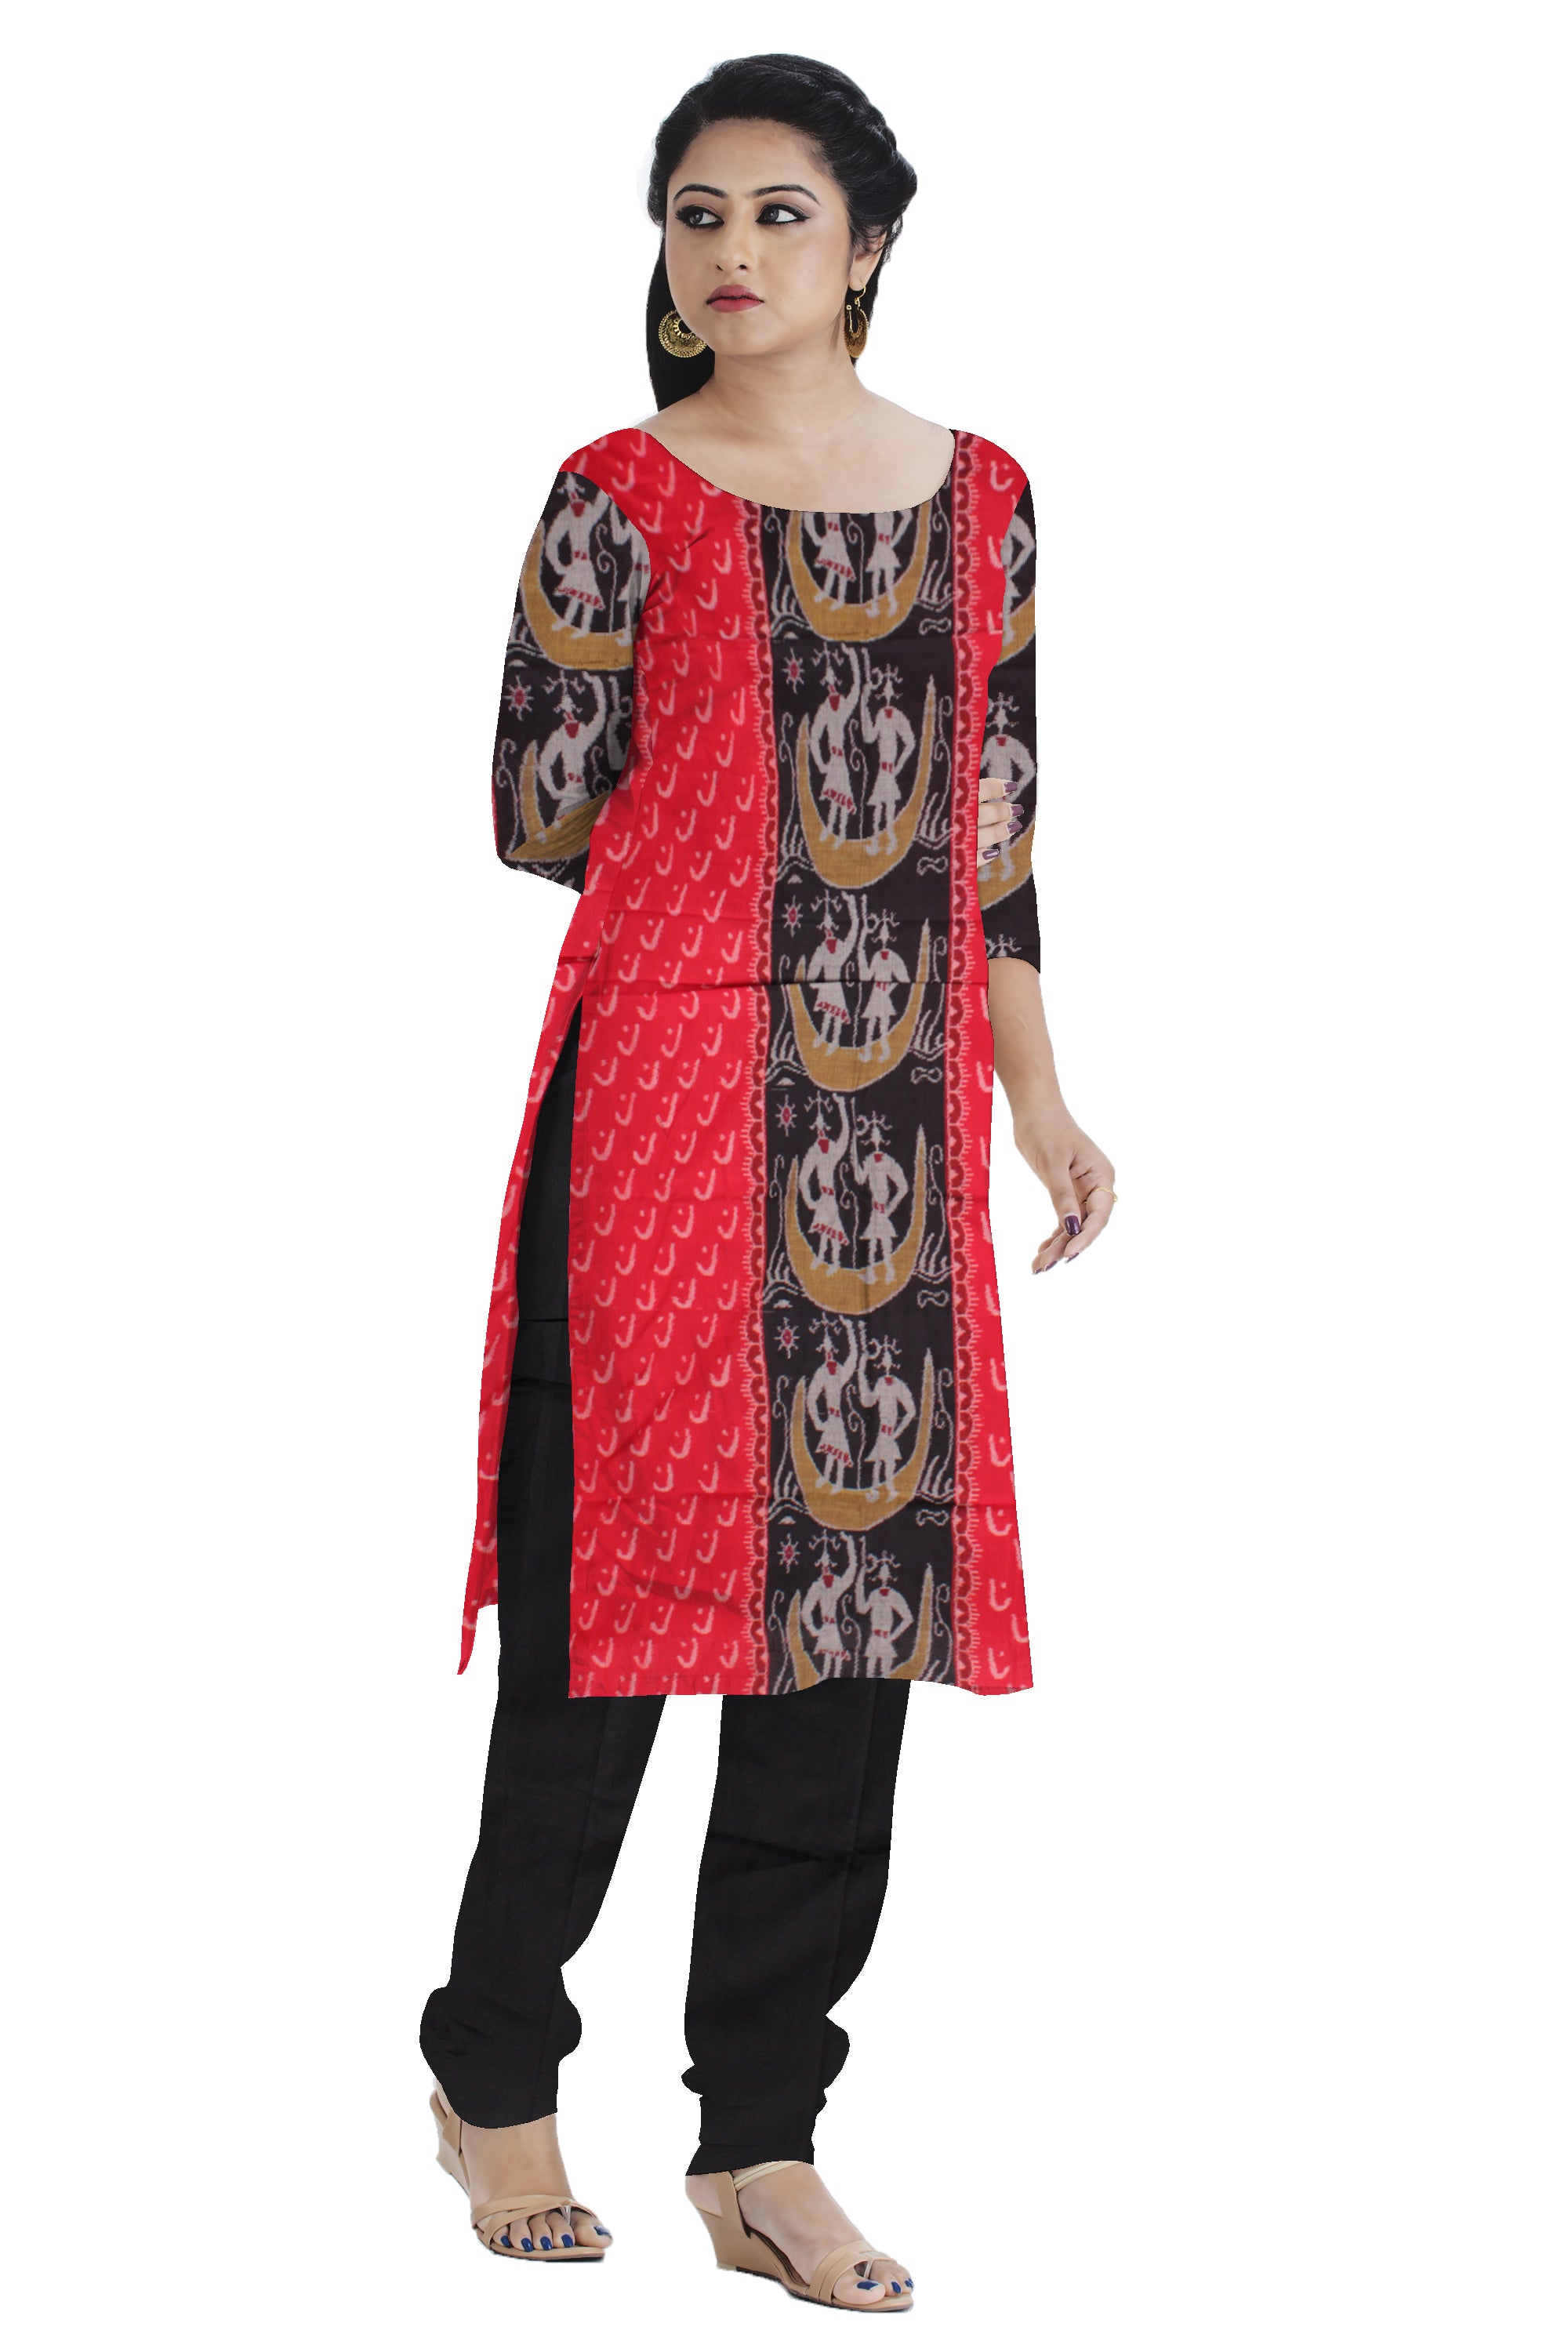 Khadi Cotton Dress Material | Dress materials, Cotton dresses, Cotton dress  material